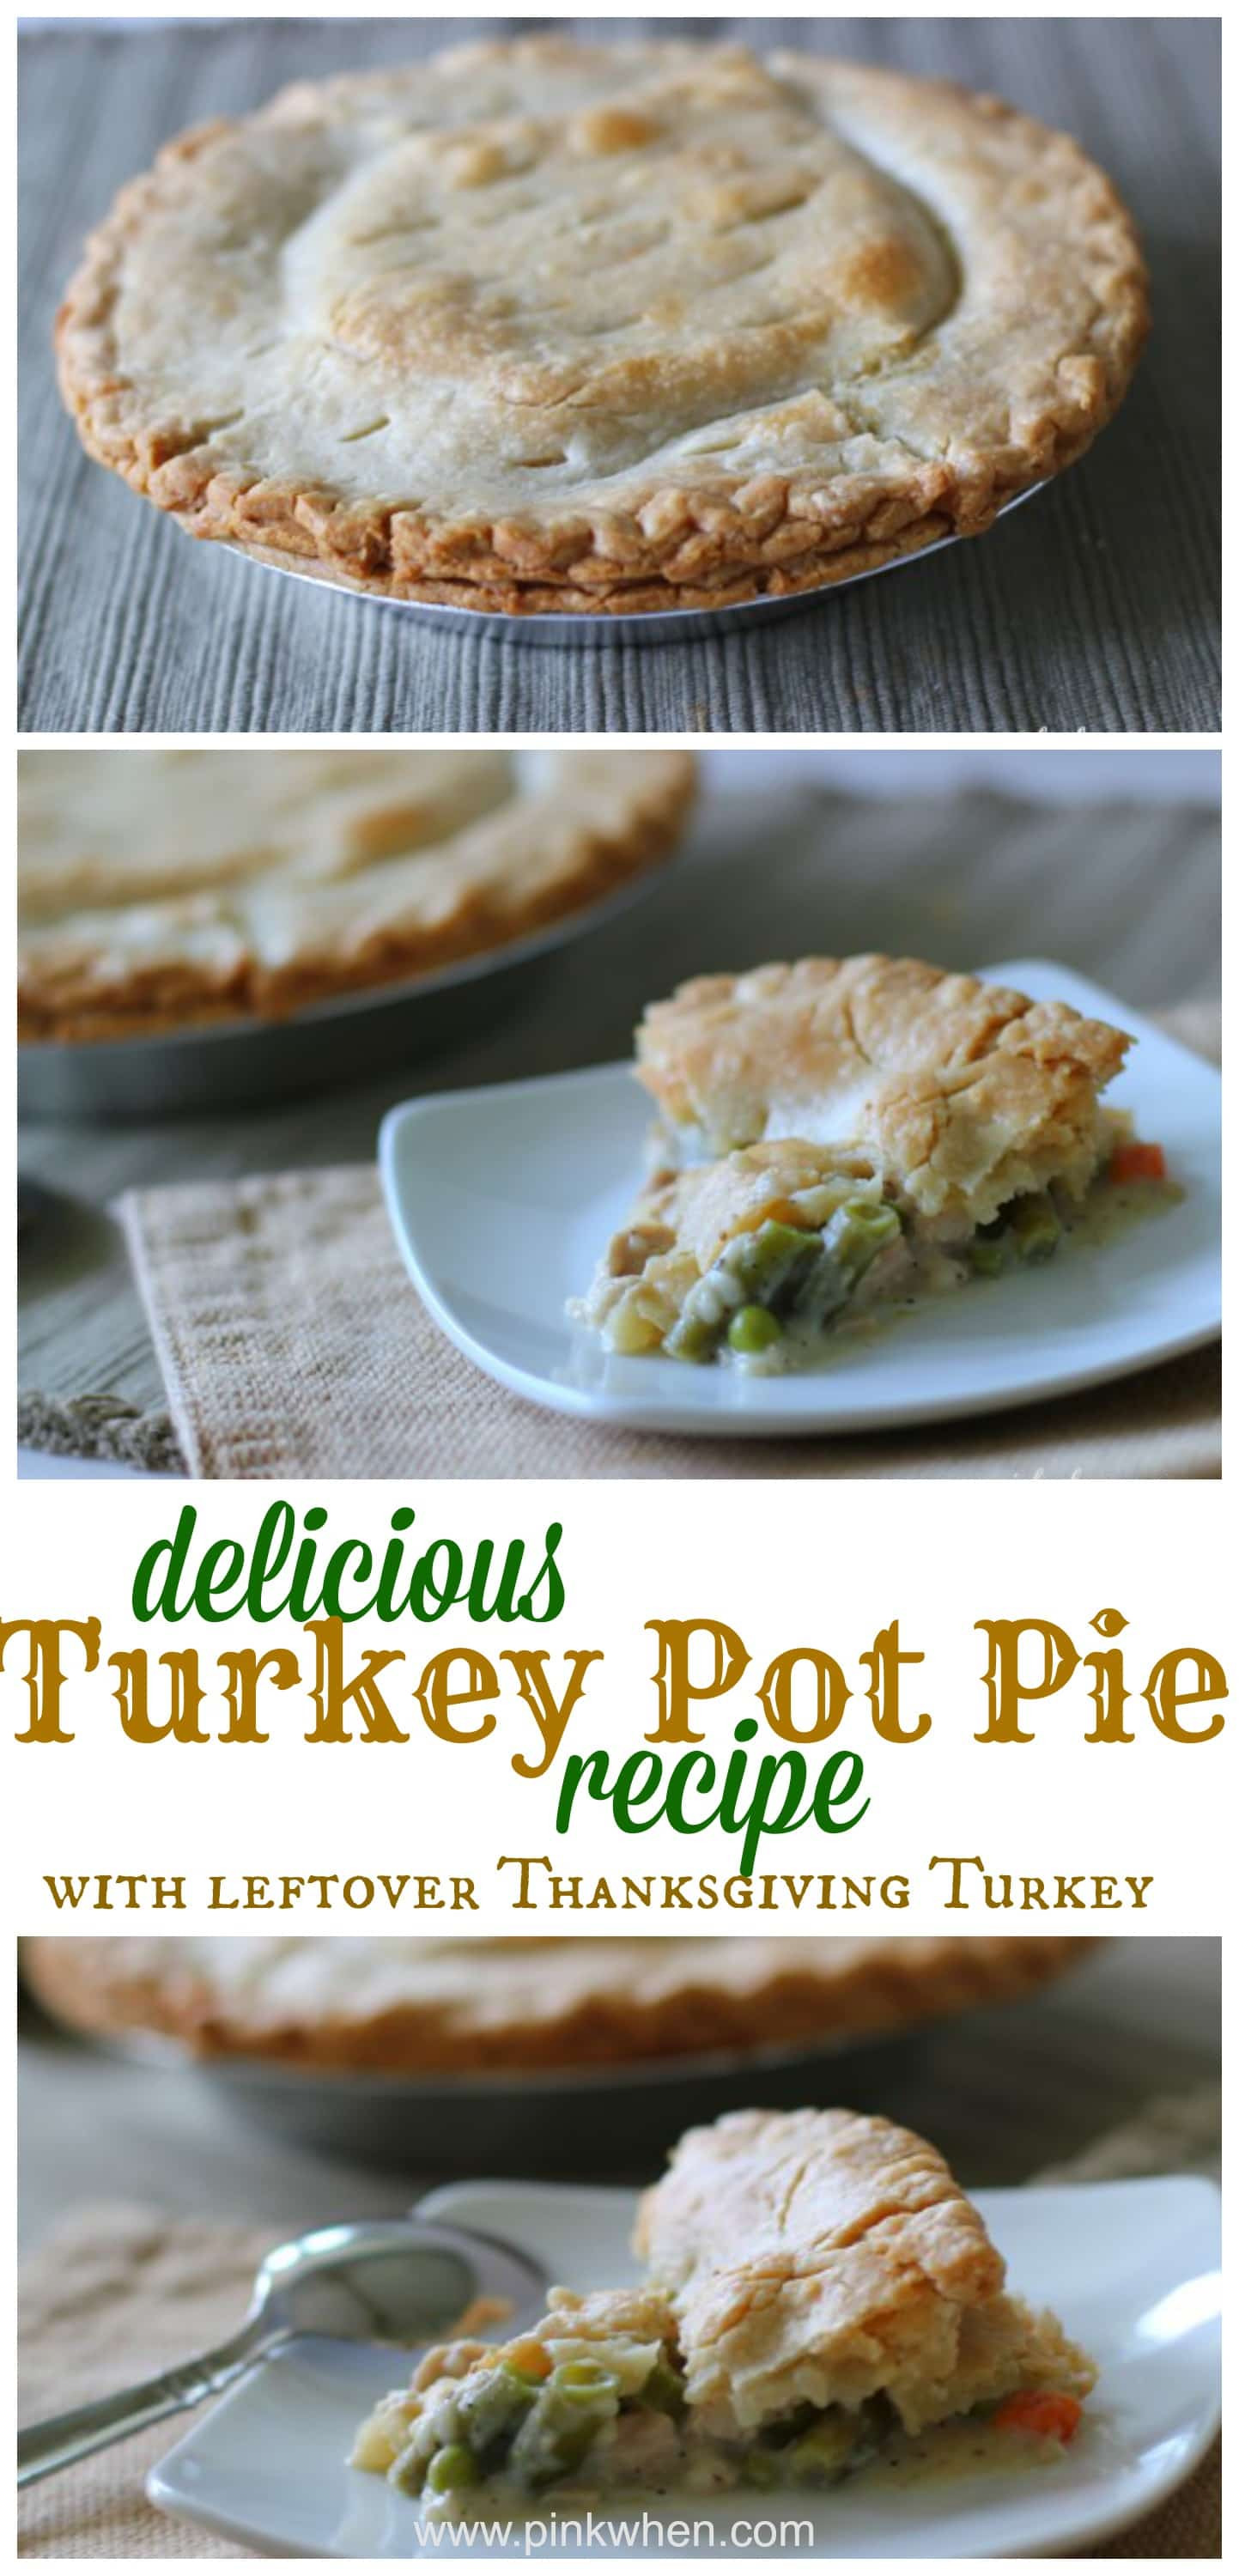 Turkey Pot Pie With Thanksgiving Leftovers
 Delicious Turkey Pot Pie Recipe PinkWhen